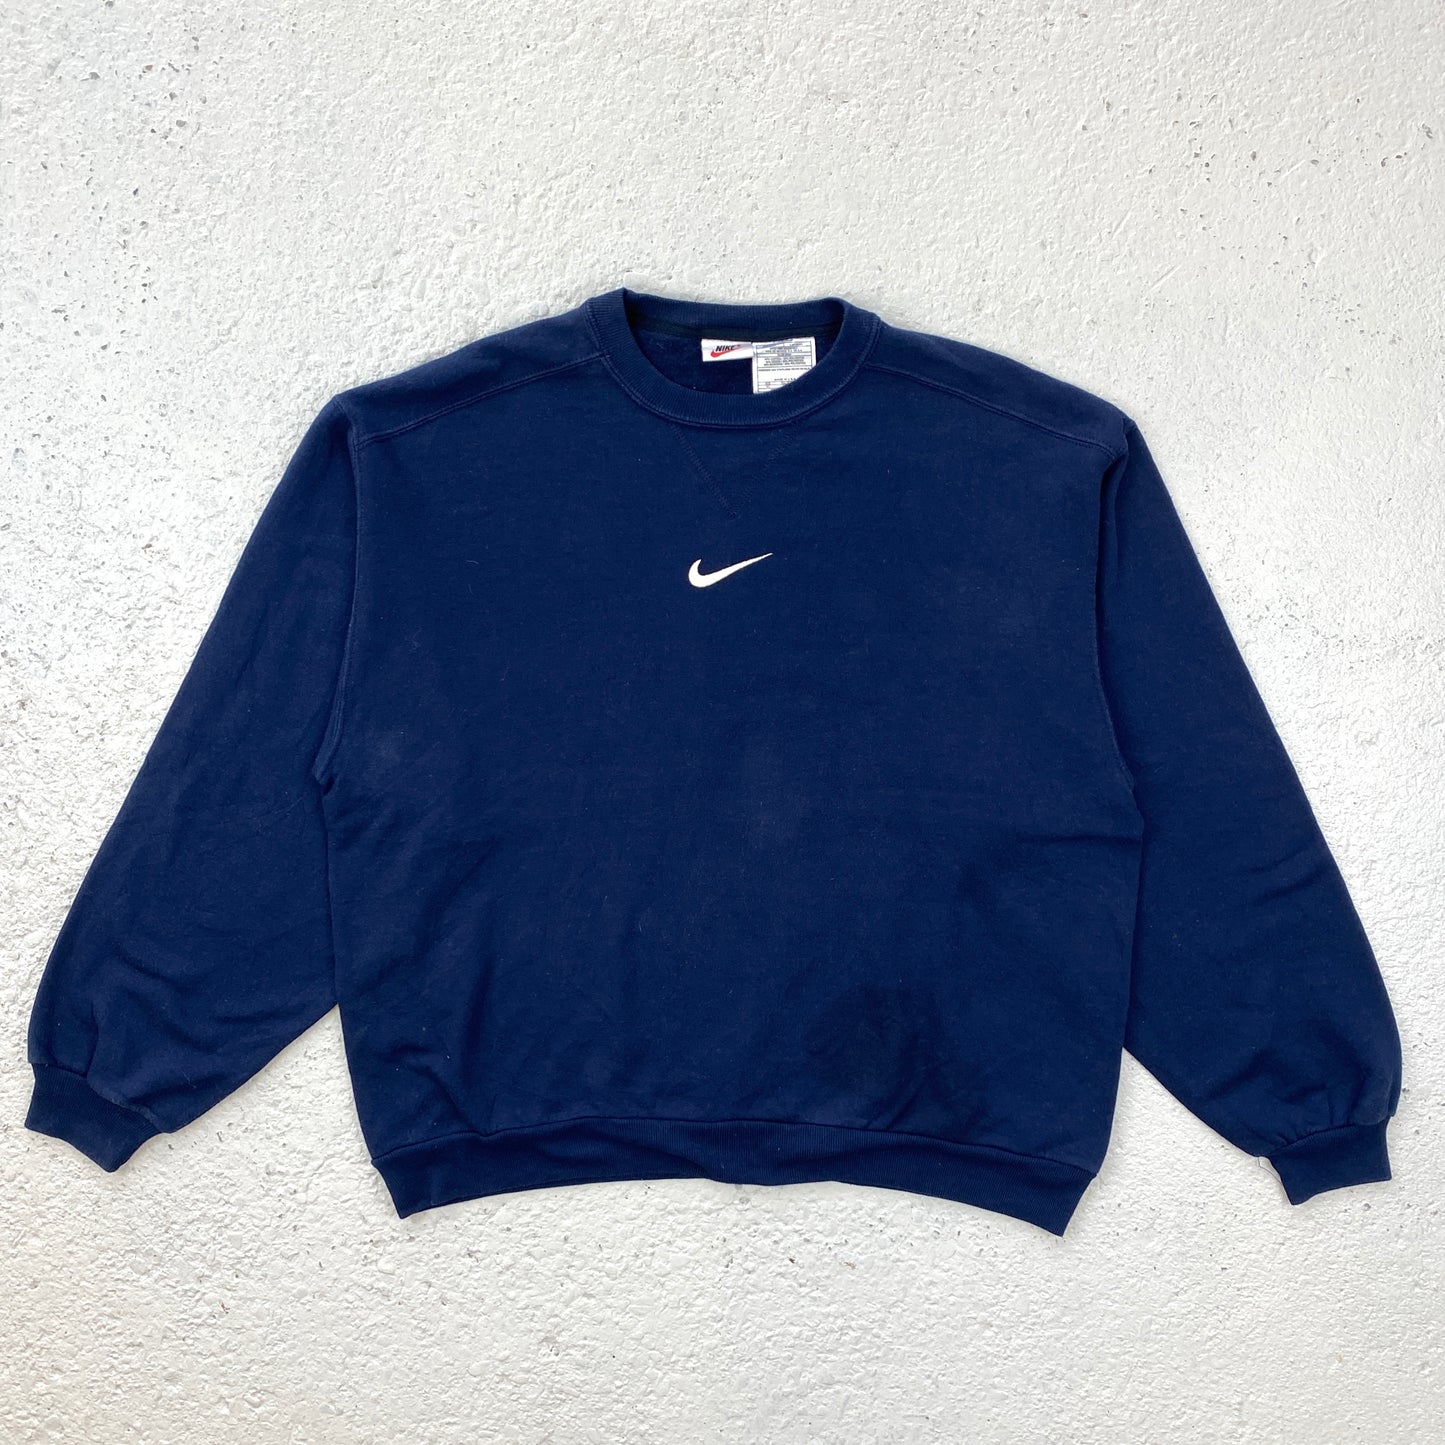 Nike RARE center swoosh sweater (S-M)